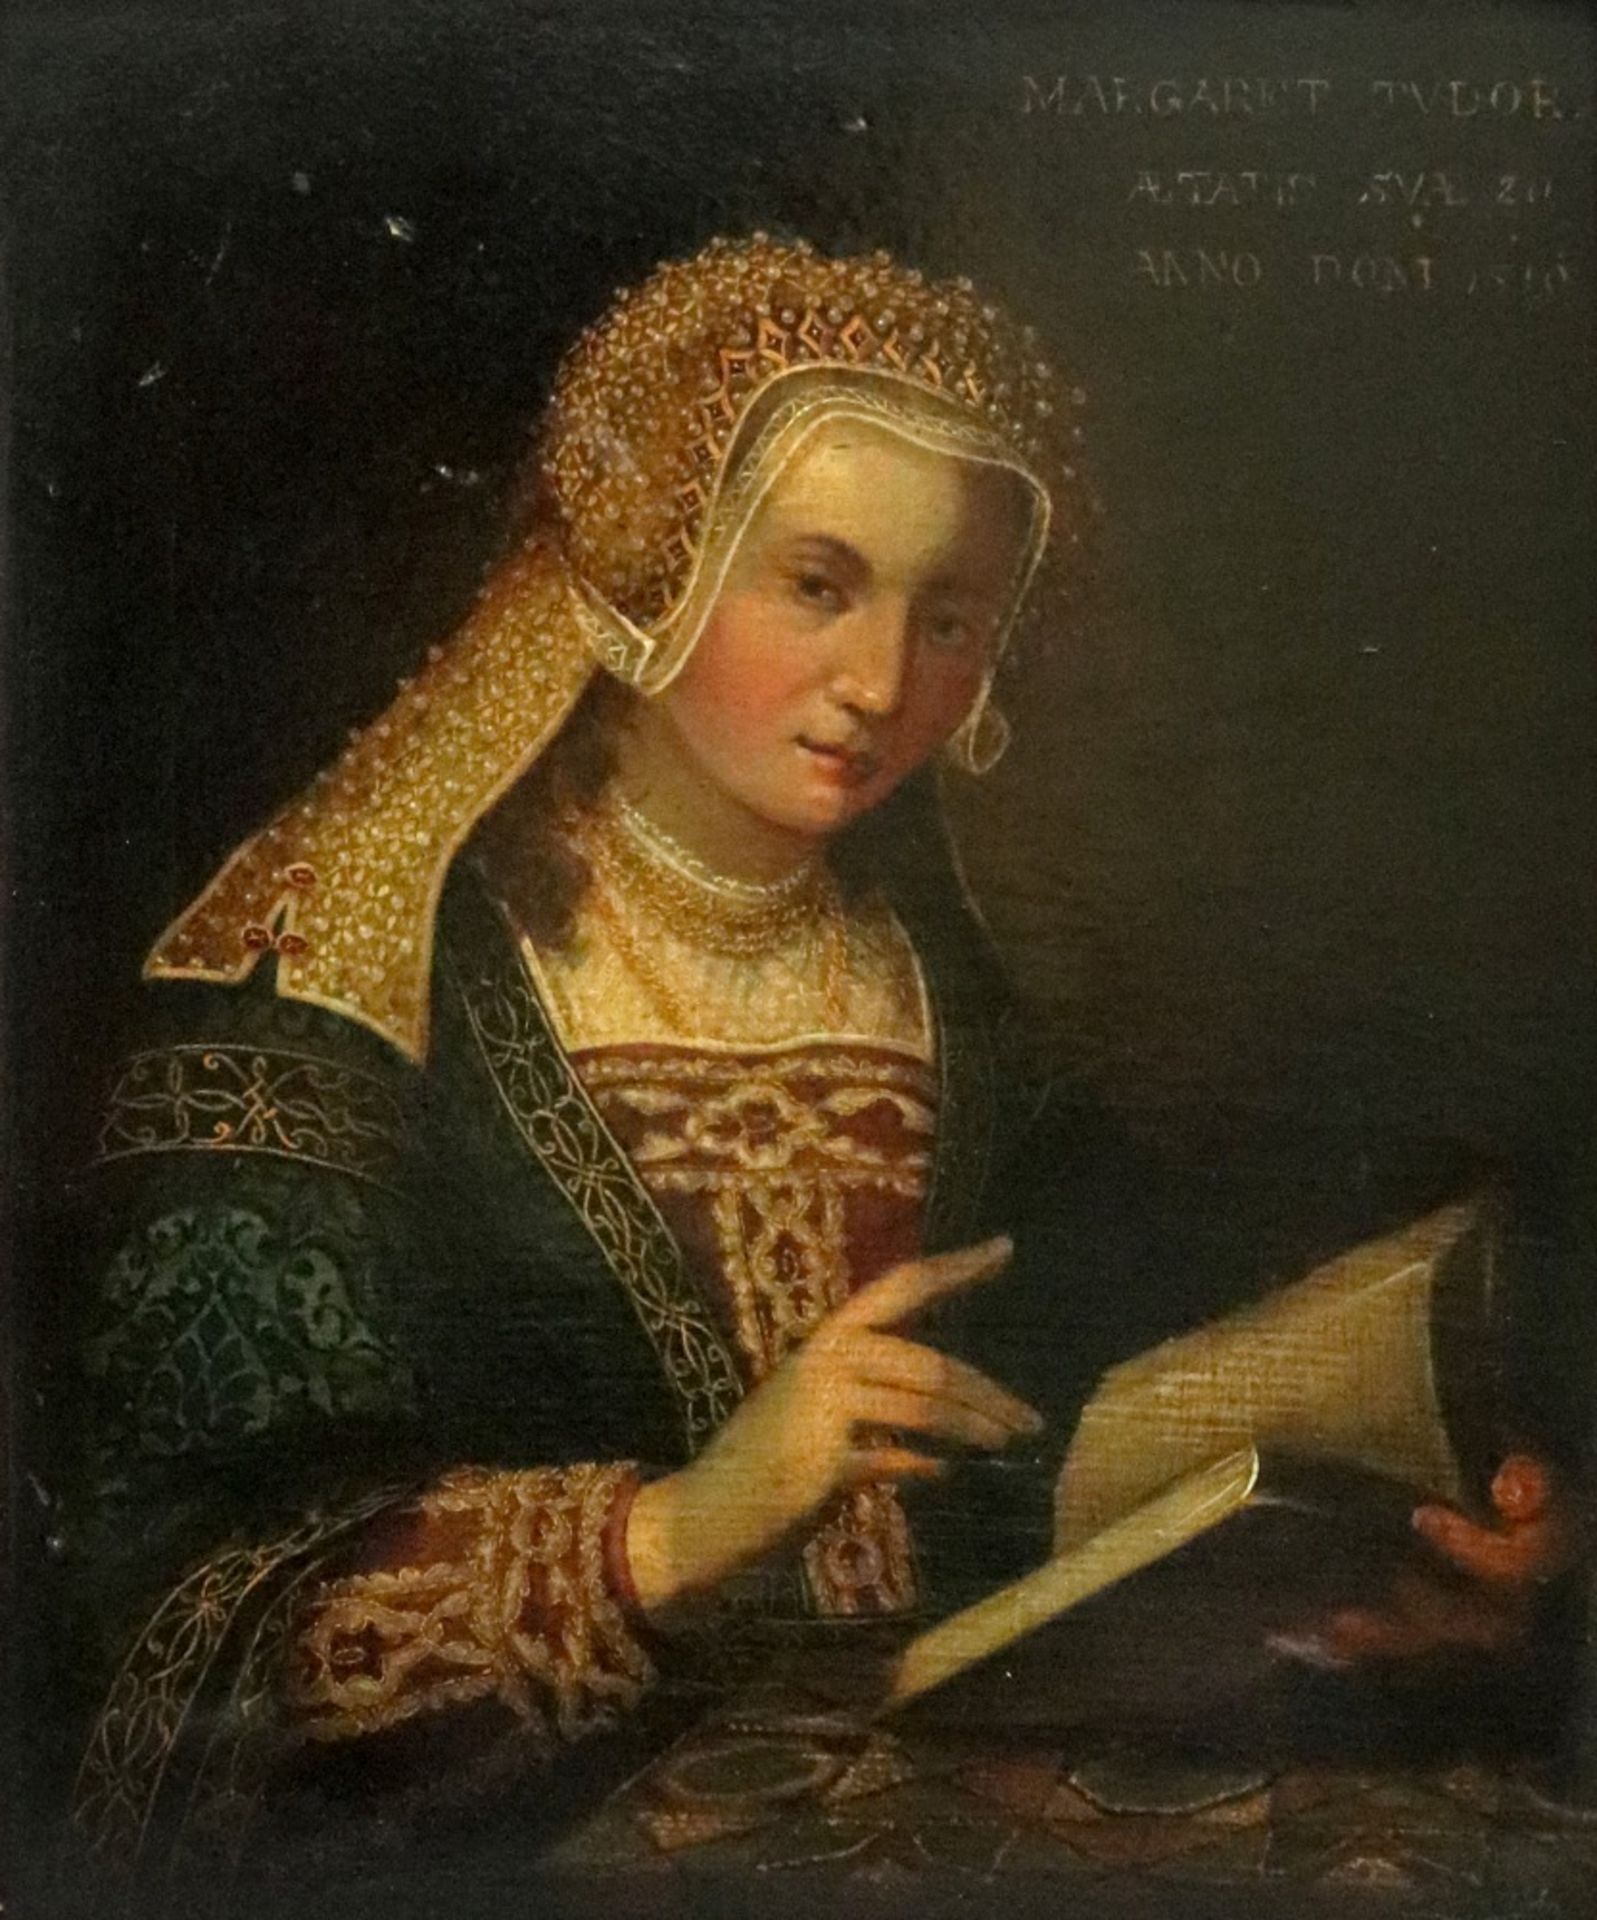 English School, A portrait of Margaret Tudor, bears inscription 'MARGARET TUDOR, AETATIS SVAE 20,